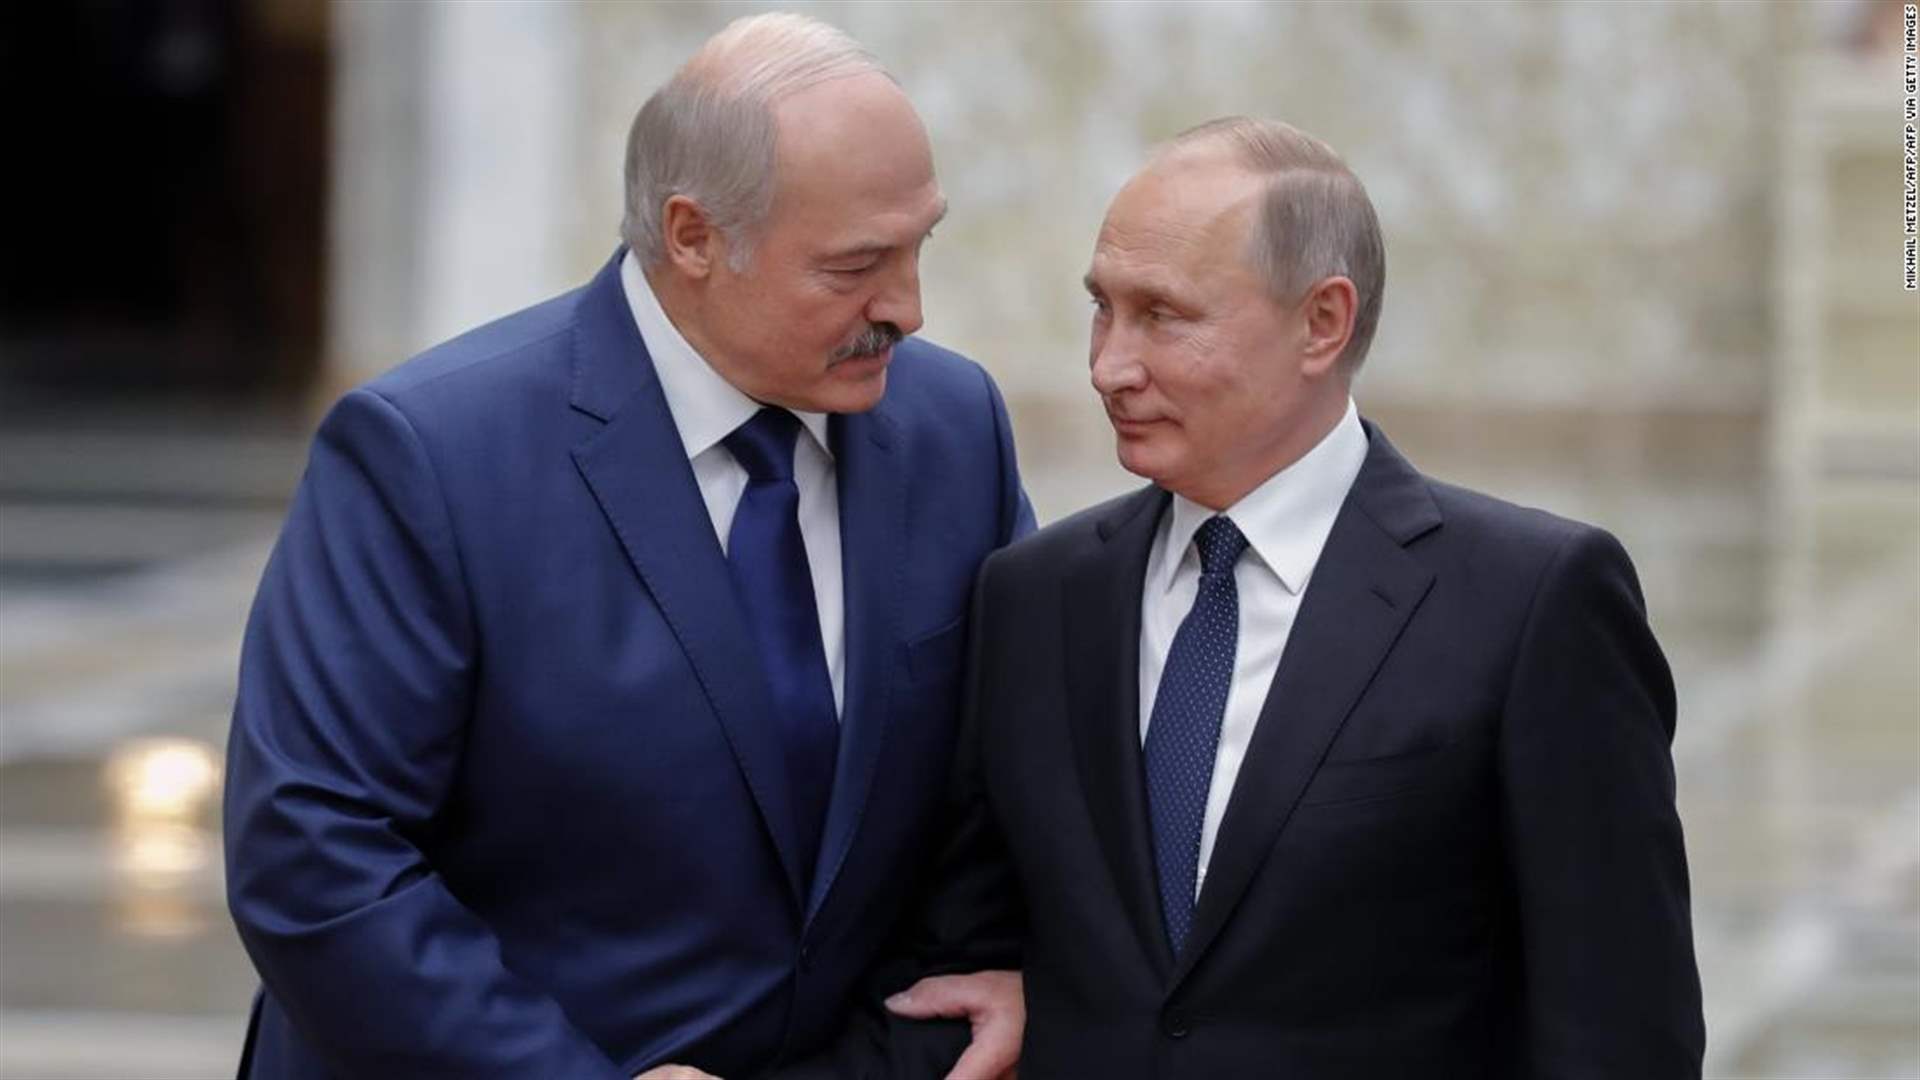 Wagner head cannot trust Lukashenko: Belarus opposition chief